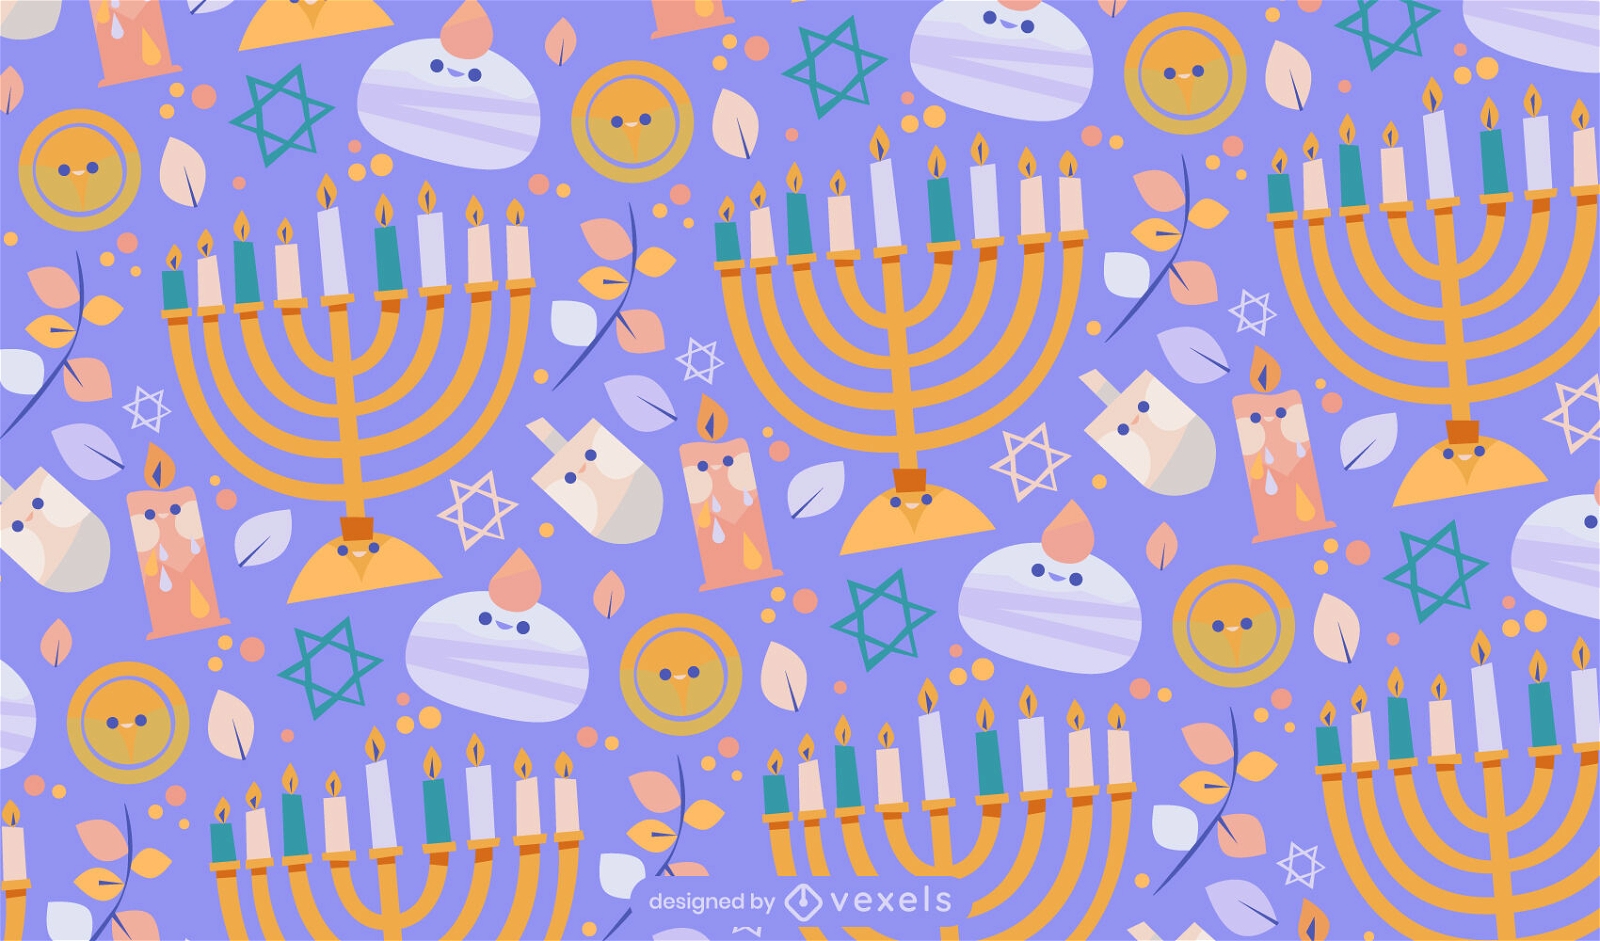 Hanukkah festivity kawaii pattern design